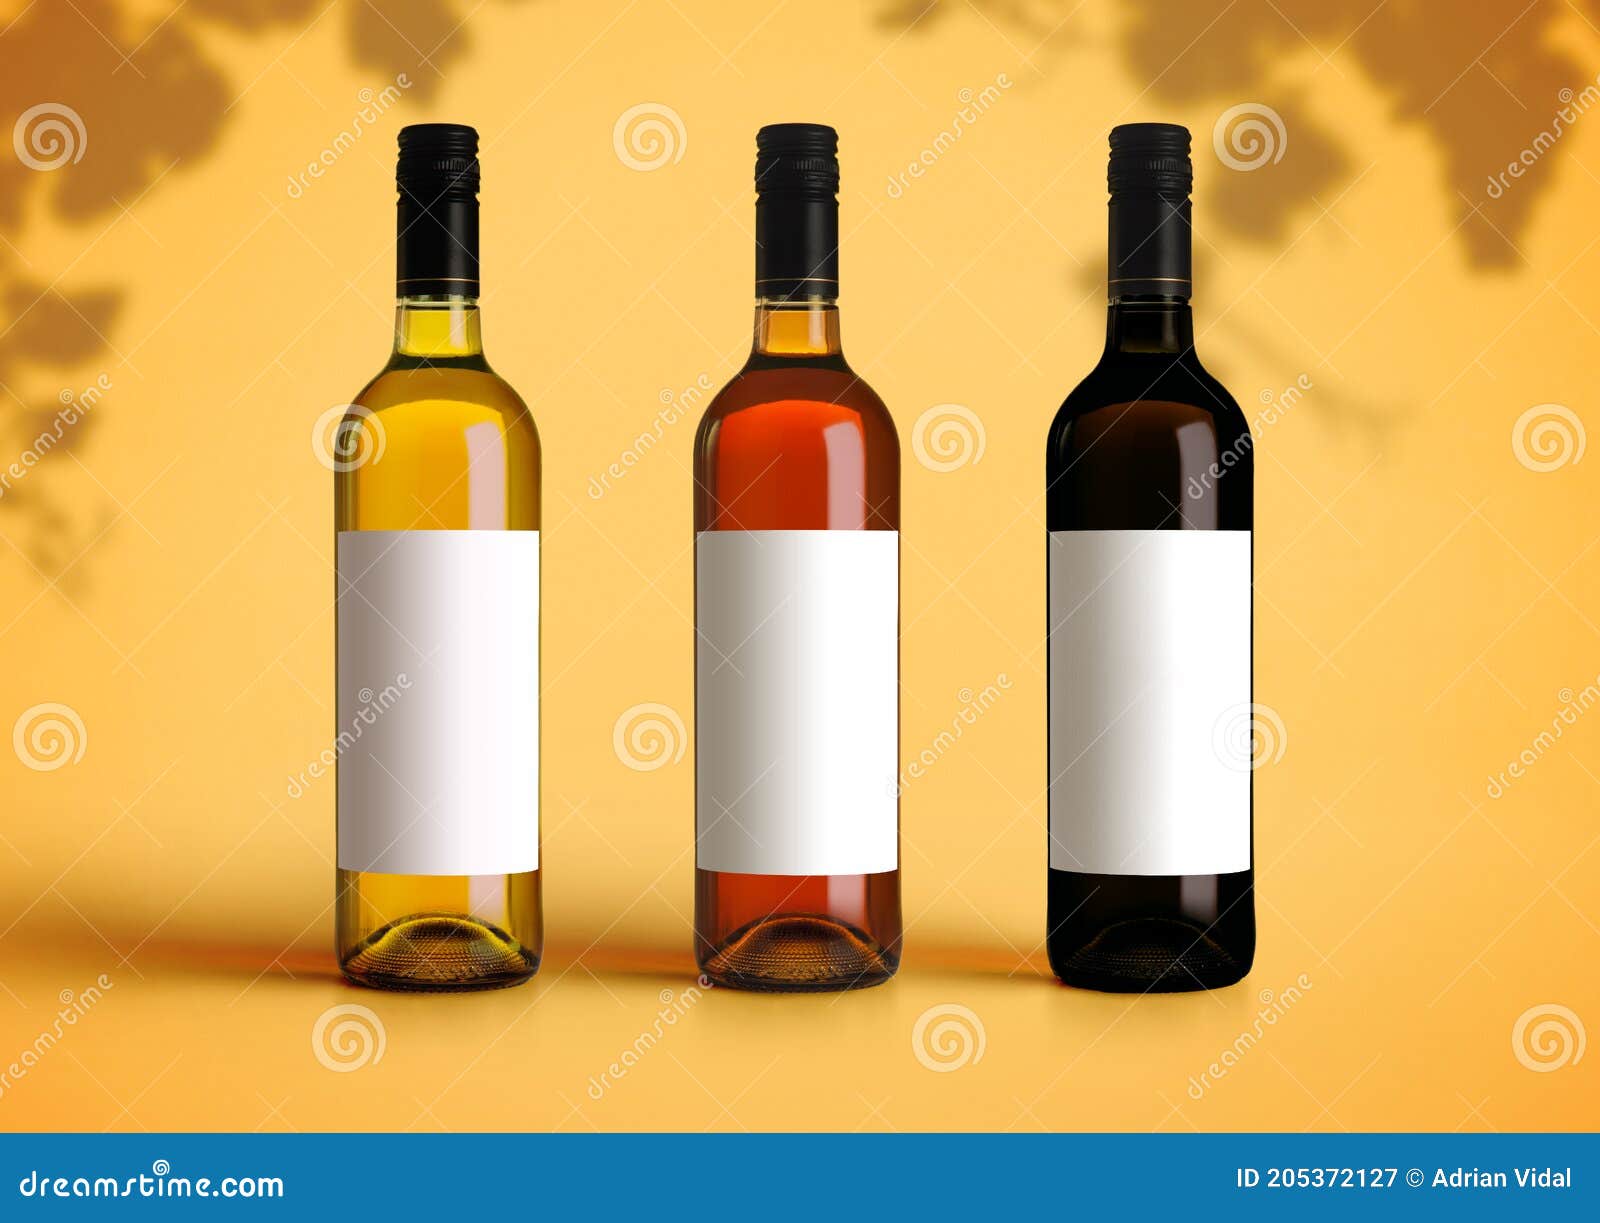 Types of label for wine bottles 